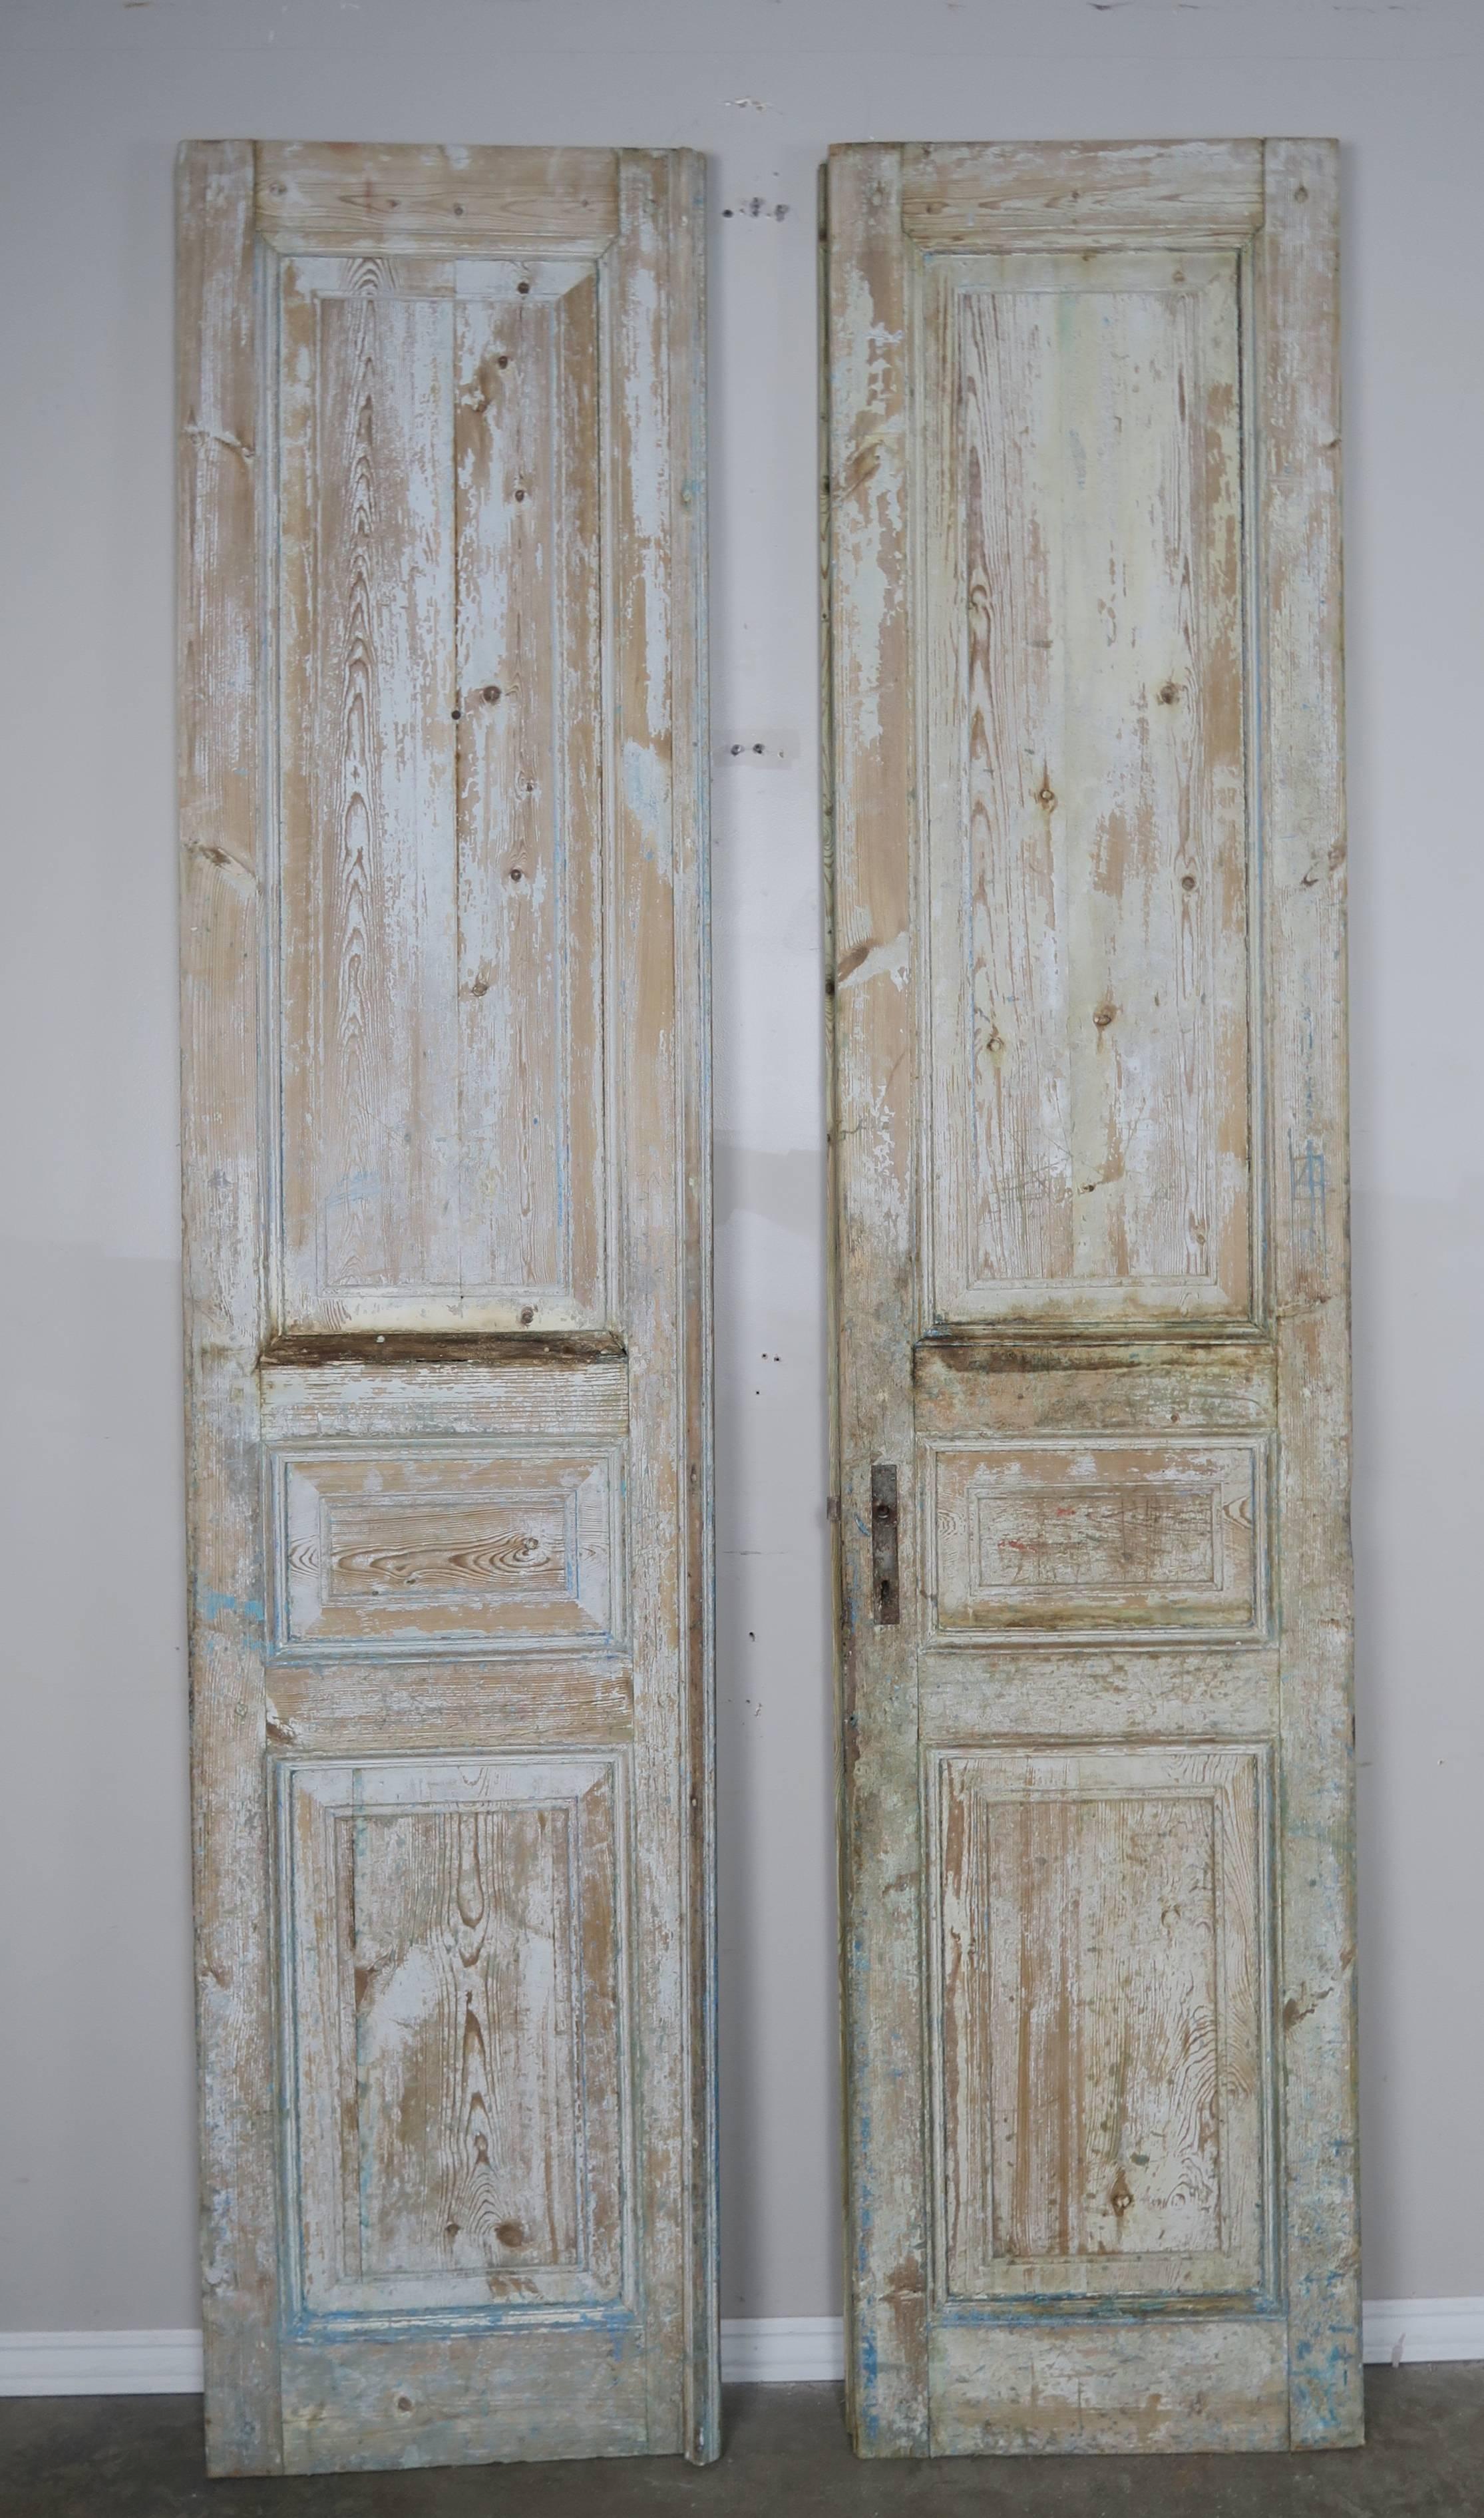 Pair of 19th century painted pine wood doors with original hardware.